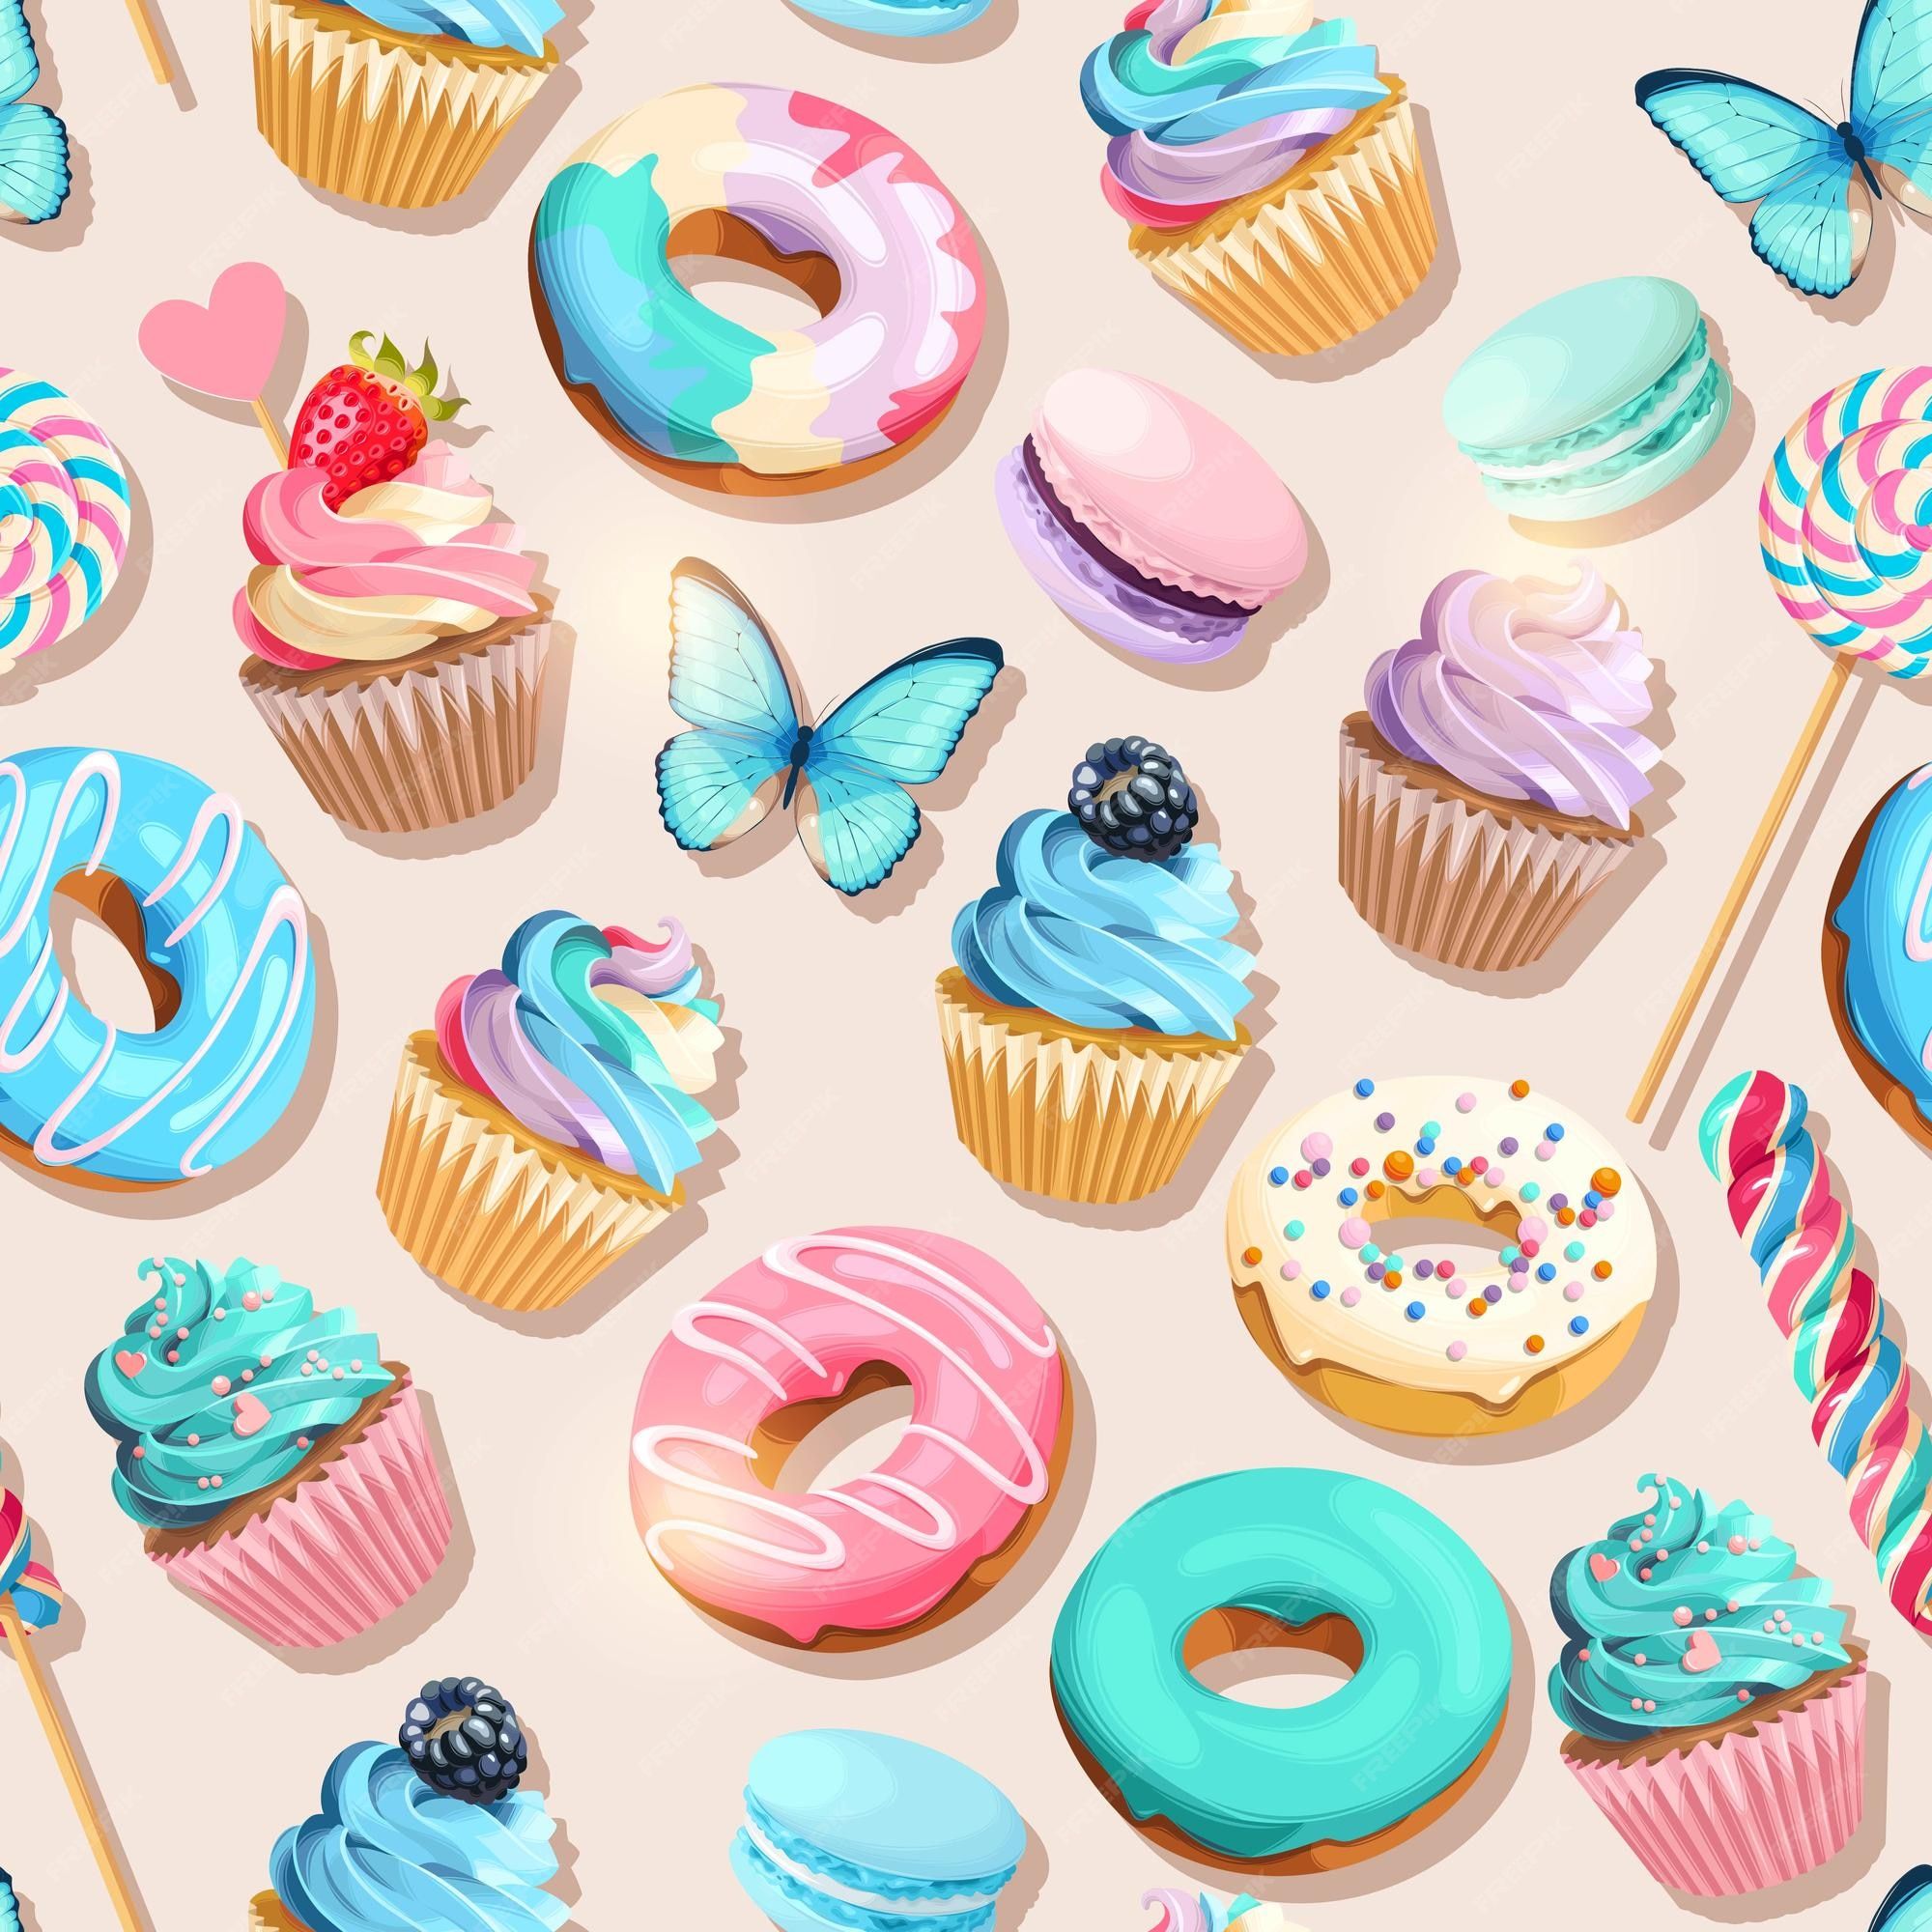 Cupcake wallpaper Vectors & Illustrations for Free Download